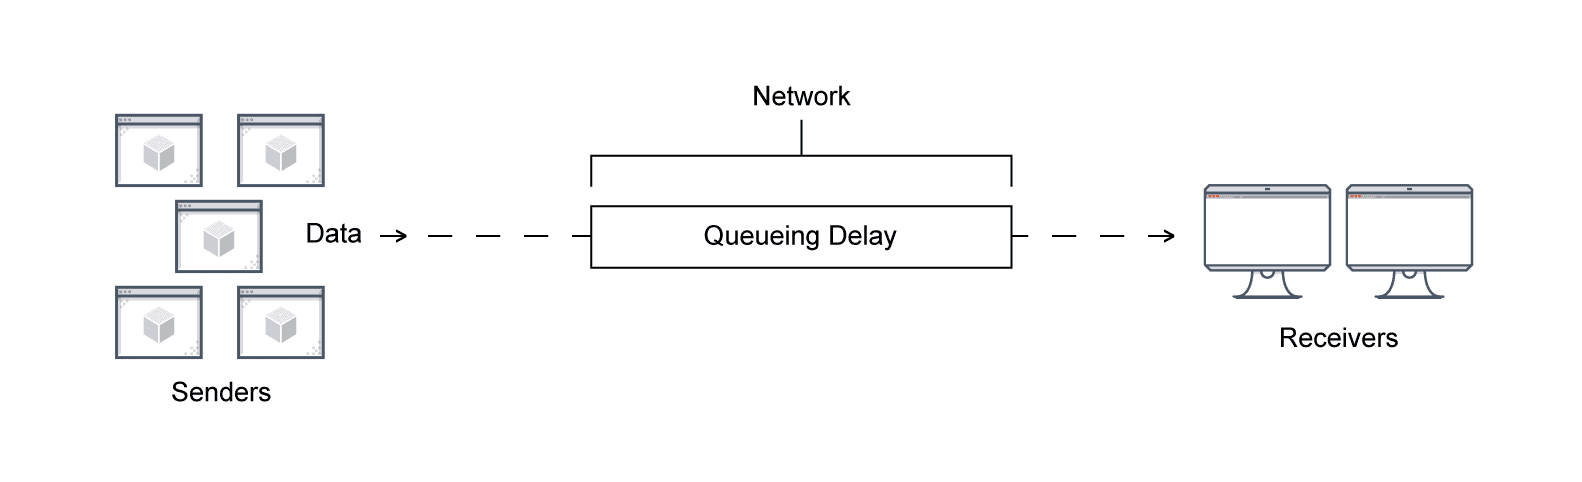 network congestion problem solving